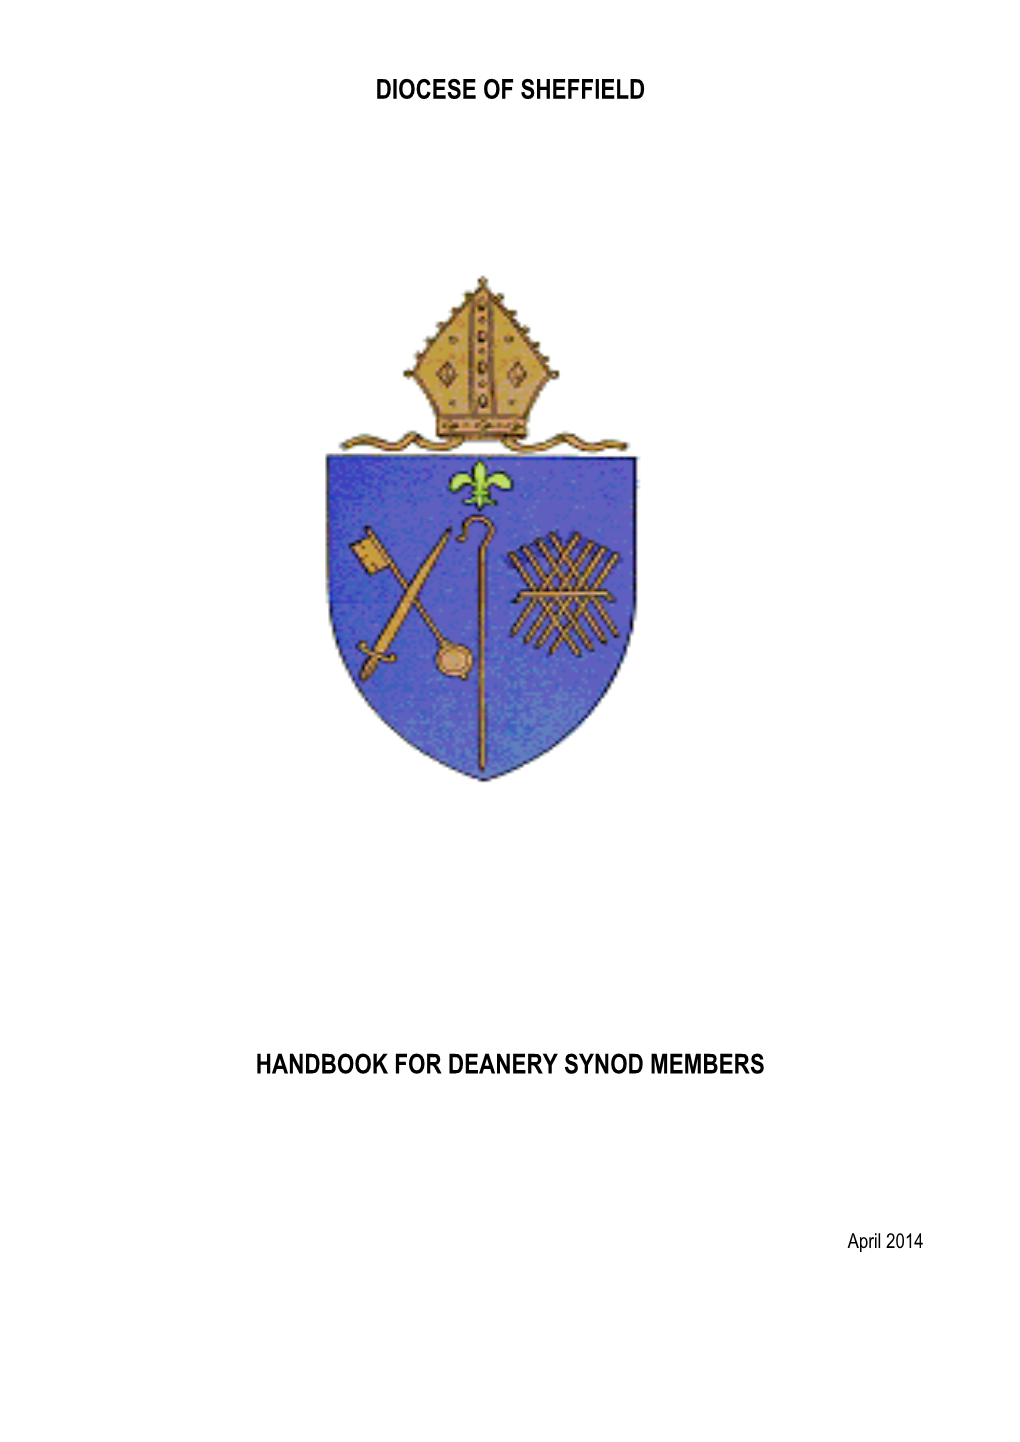 Deanery Synod Member's Handbook